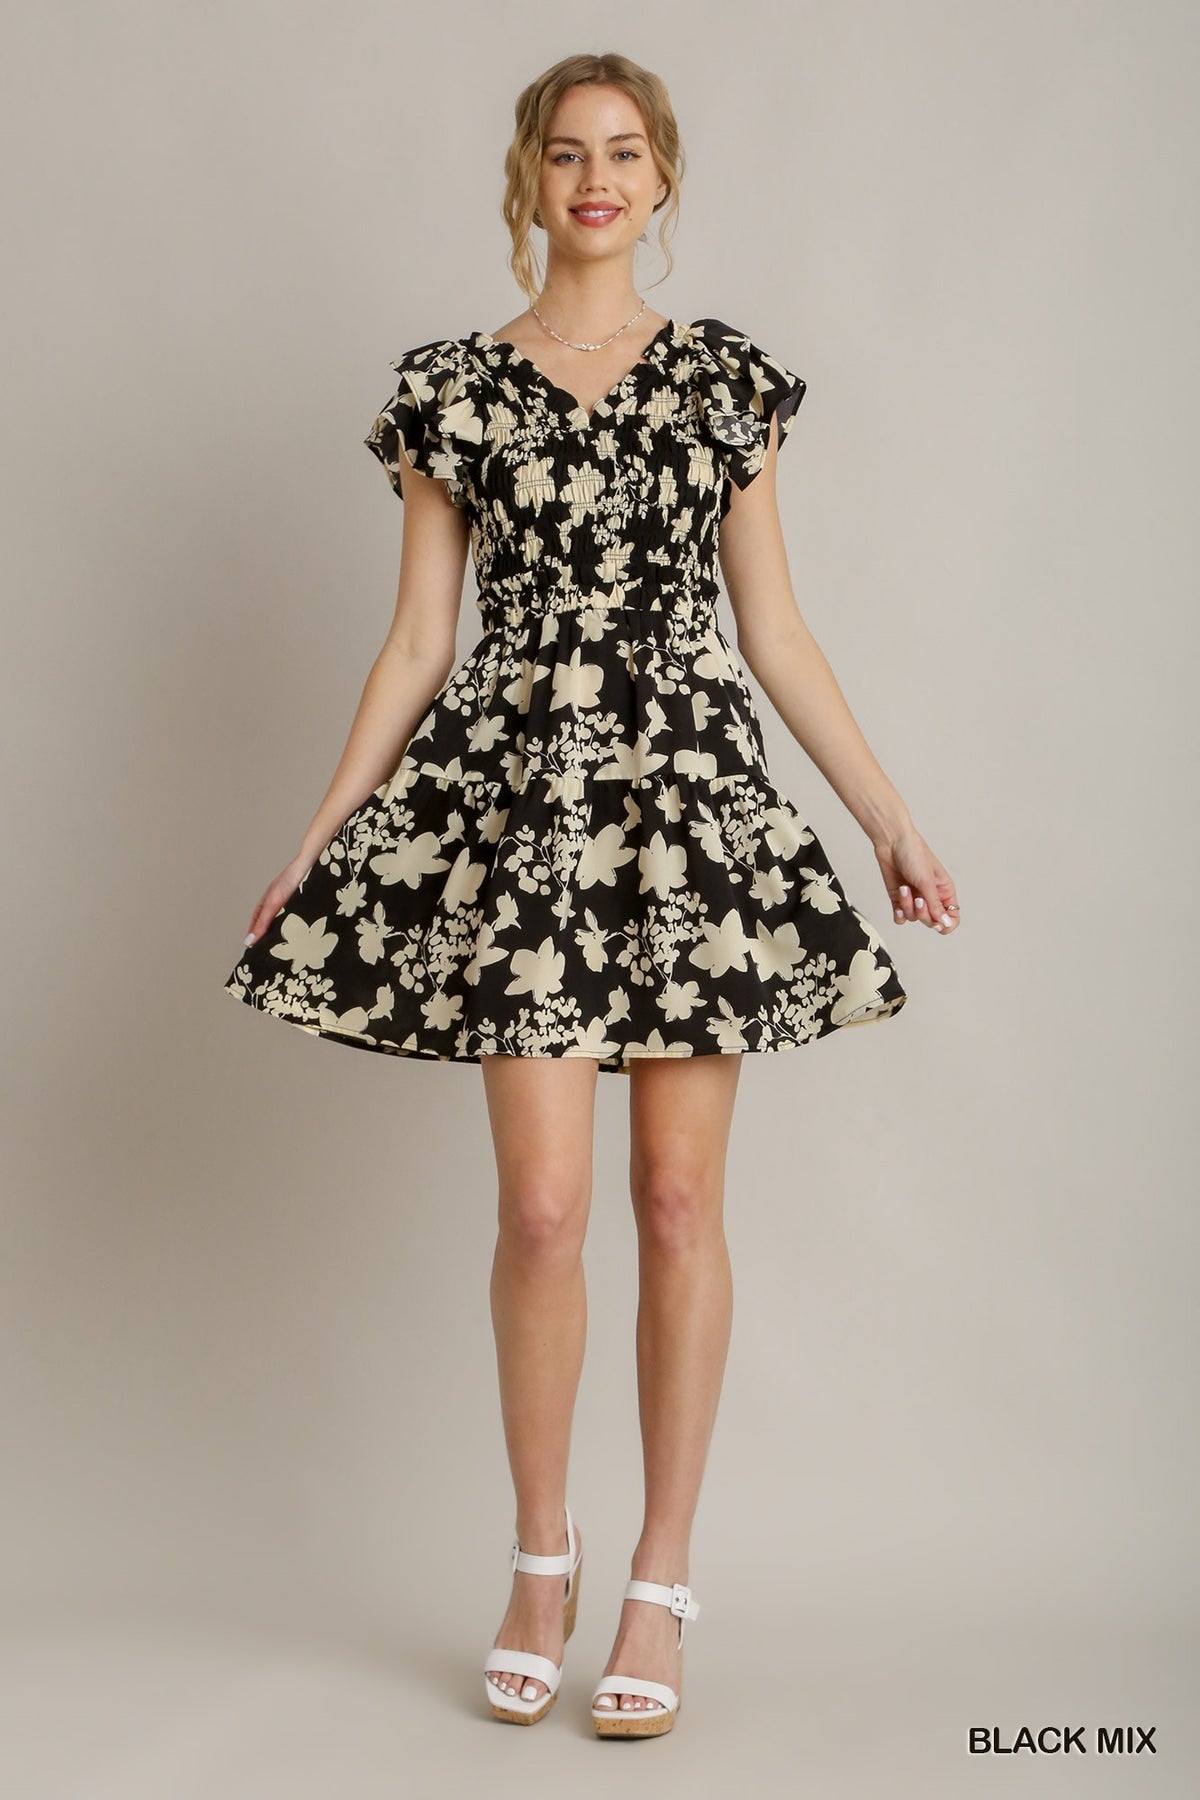 Pricilla Black Floral Dress